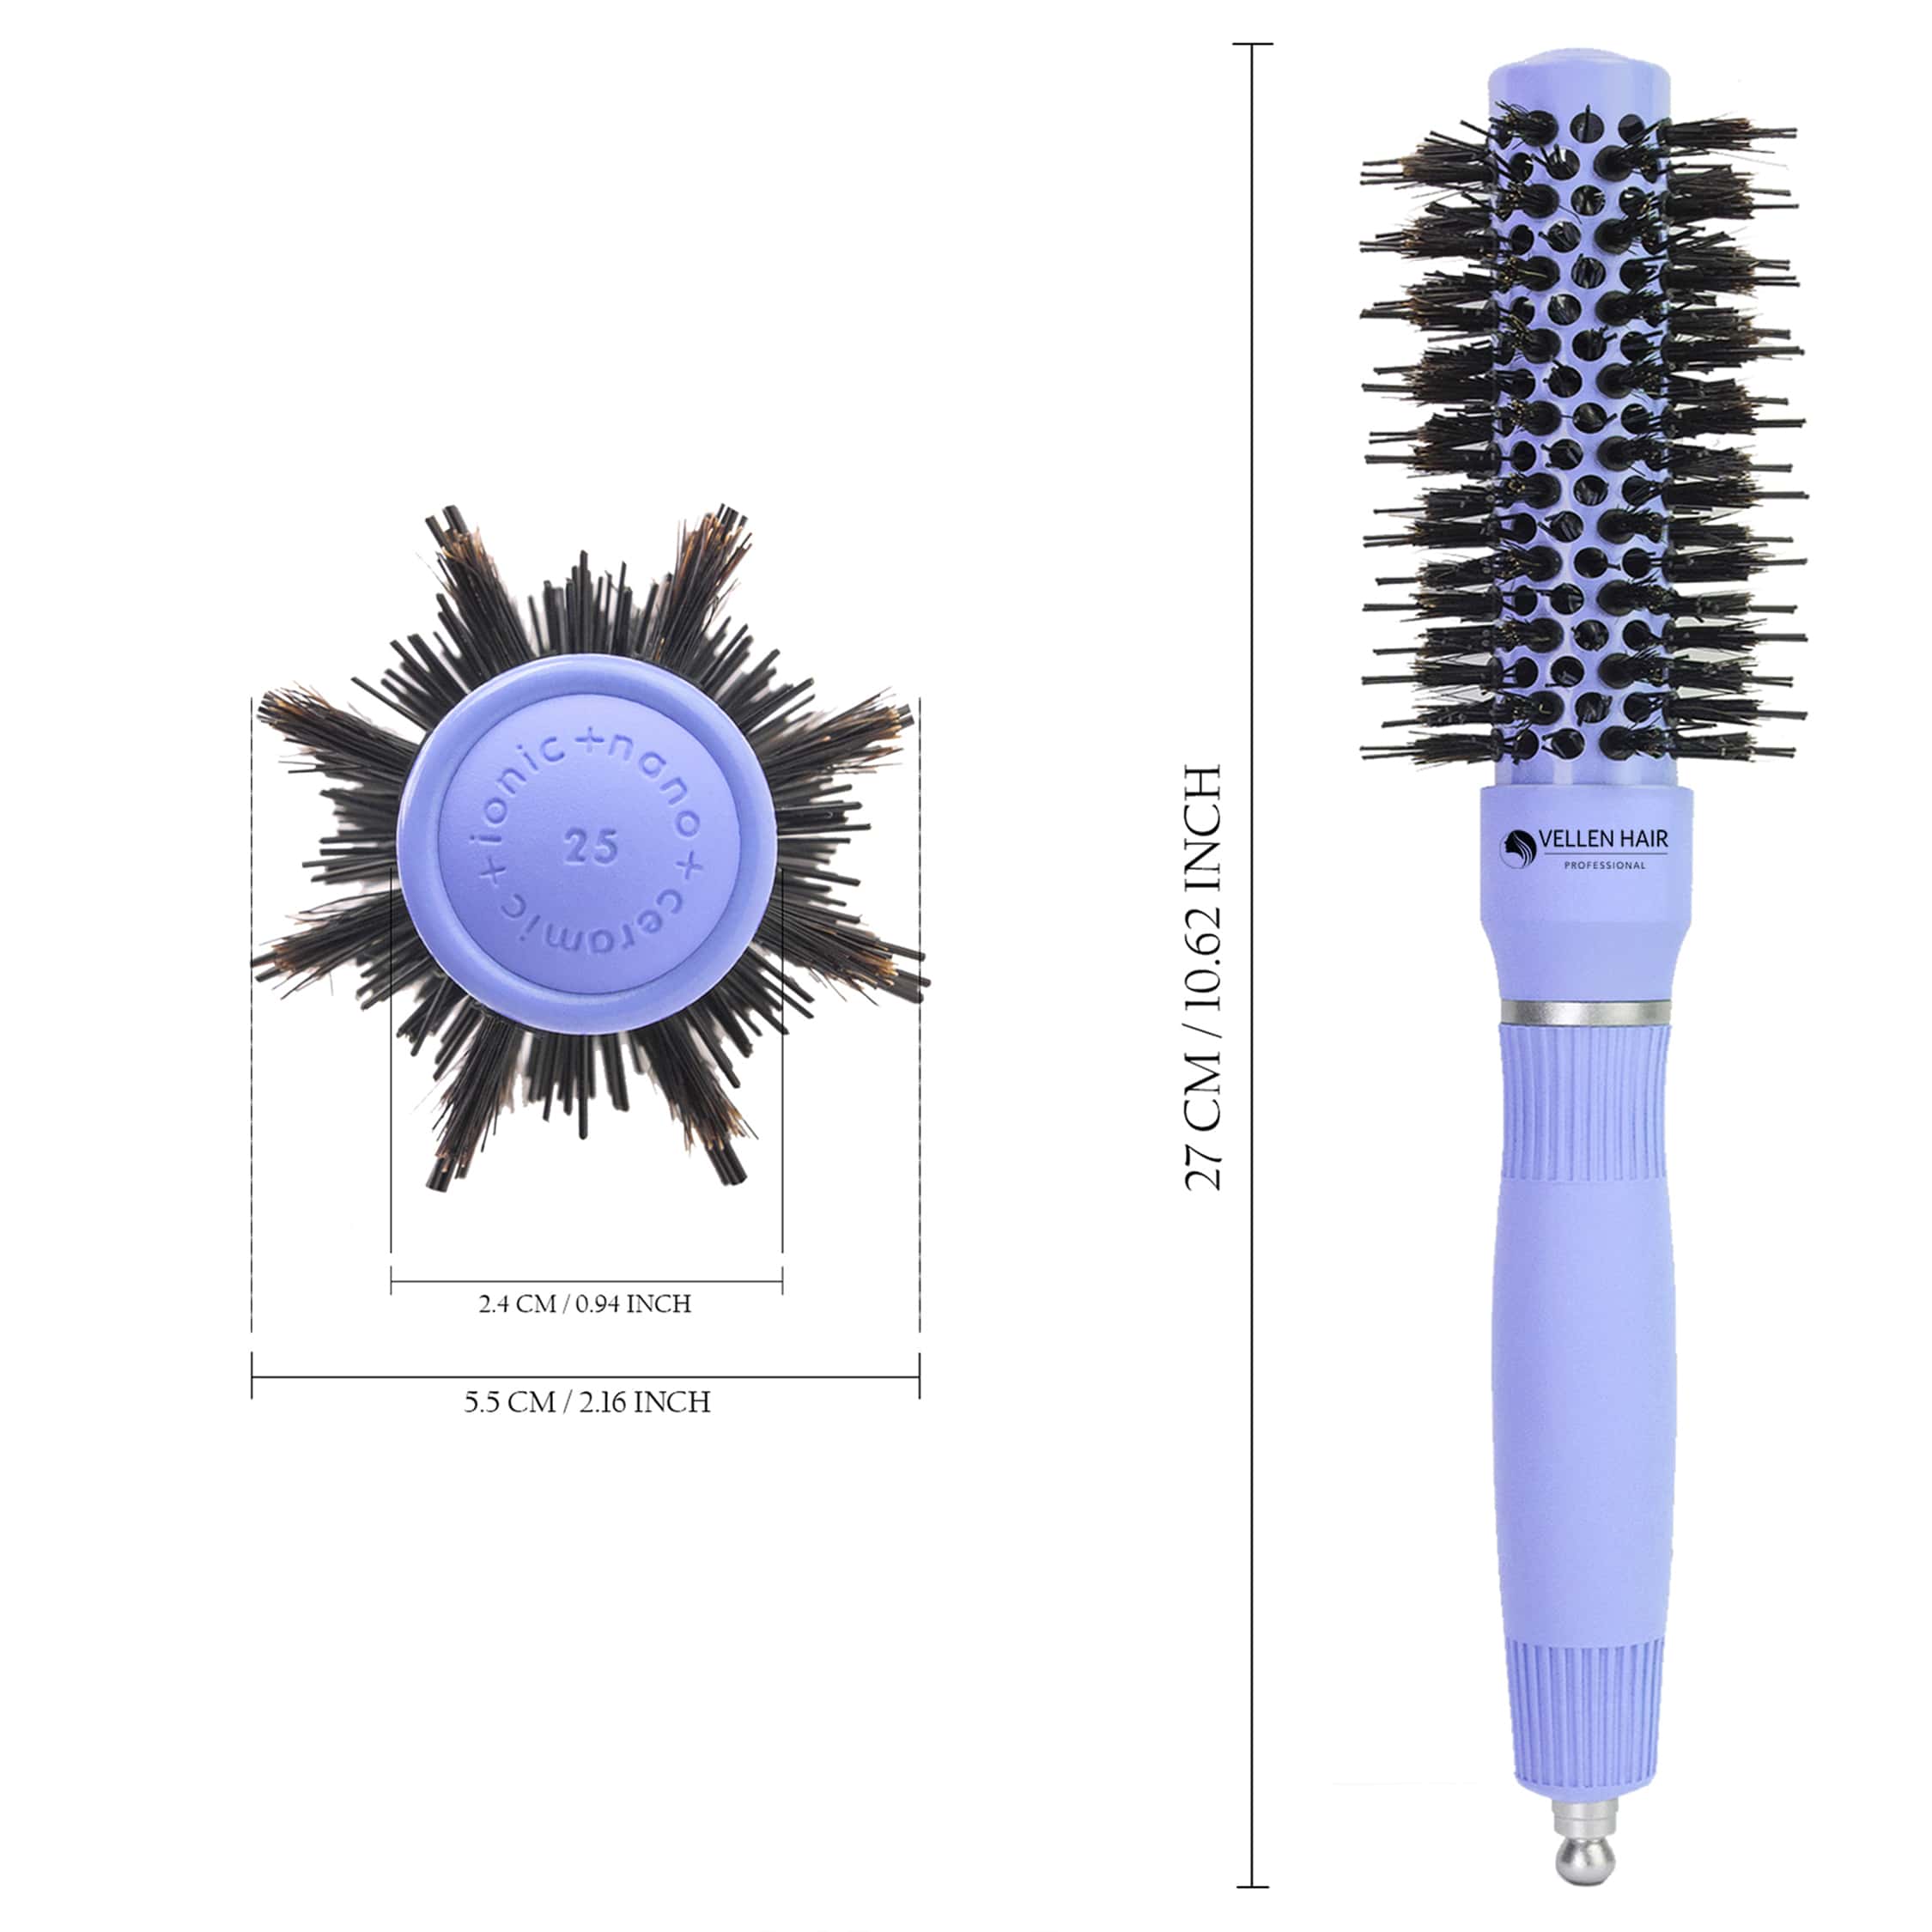 Ceramic/Ionic Round Hairbrush 1 inch / 25 mm - Violet